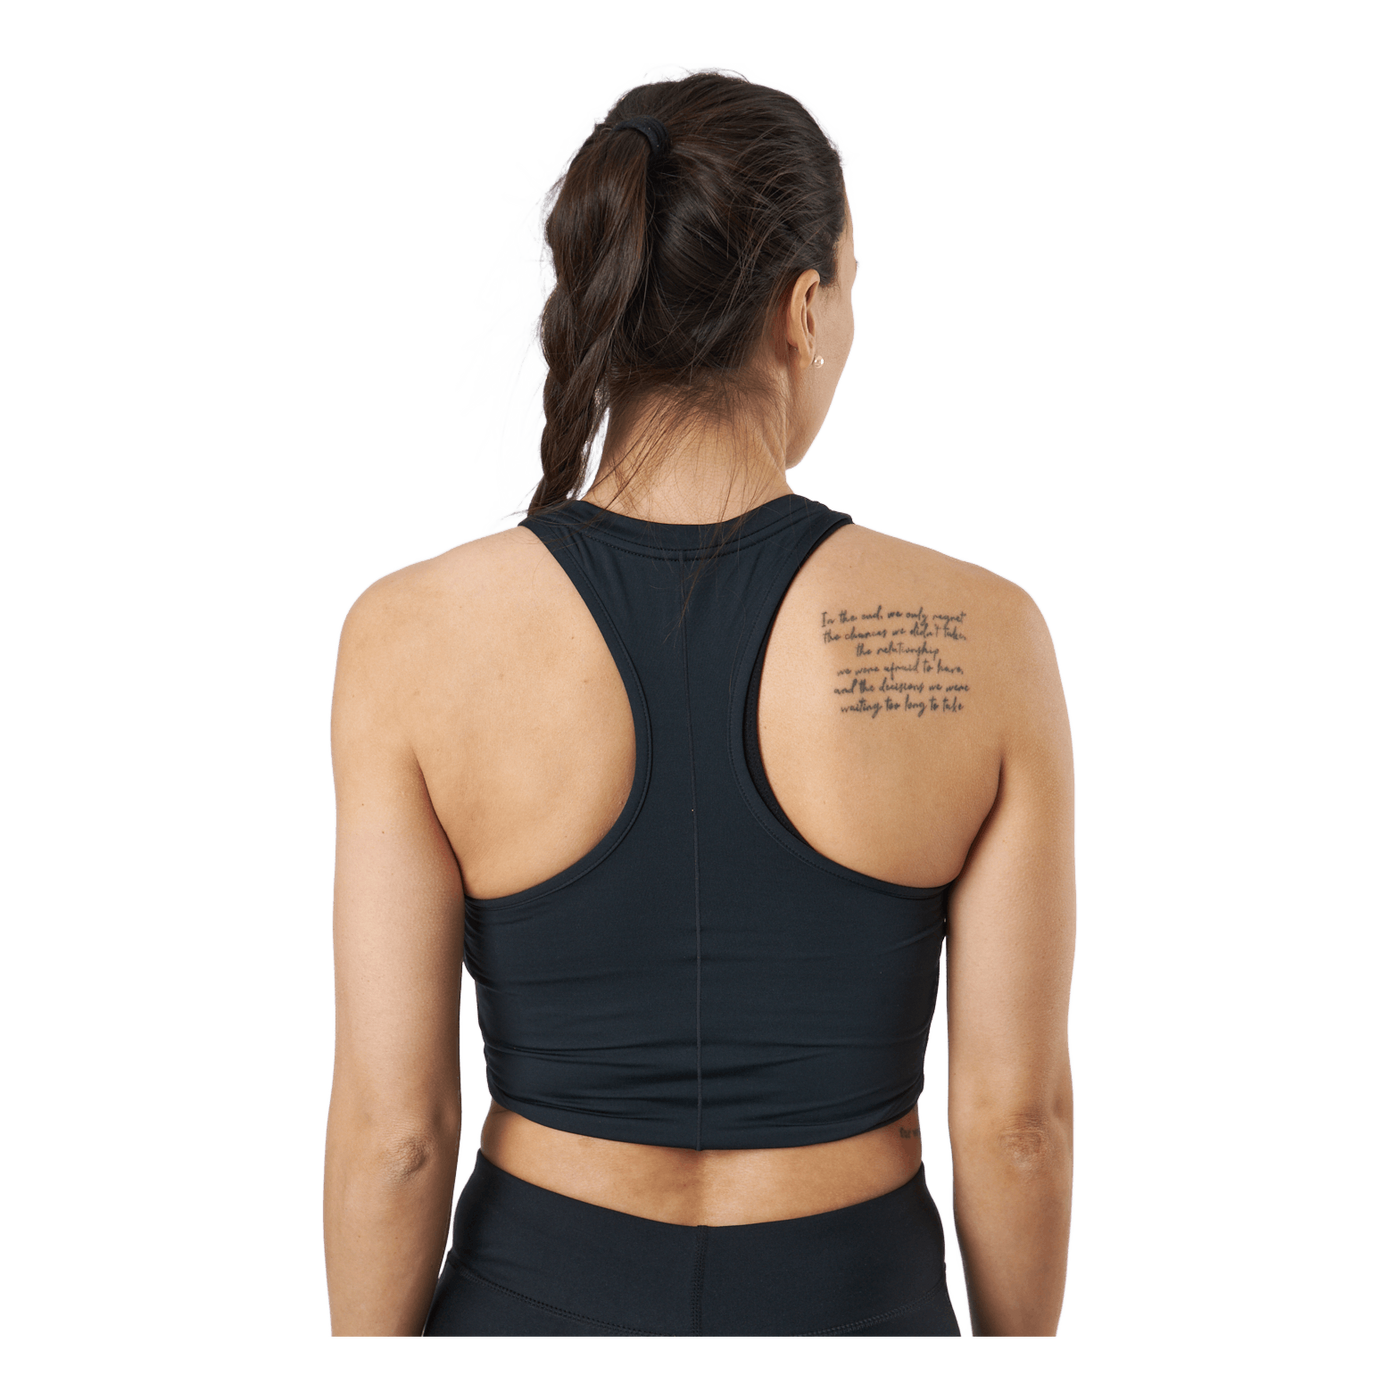 Nike Dri-fit One Luxe Women's  Black/metallic Gold